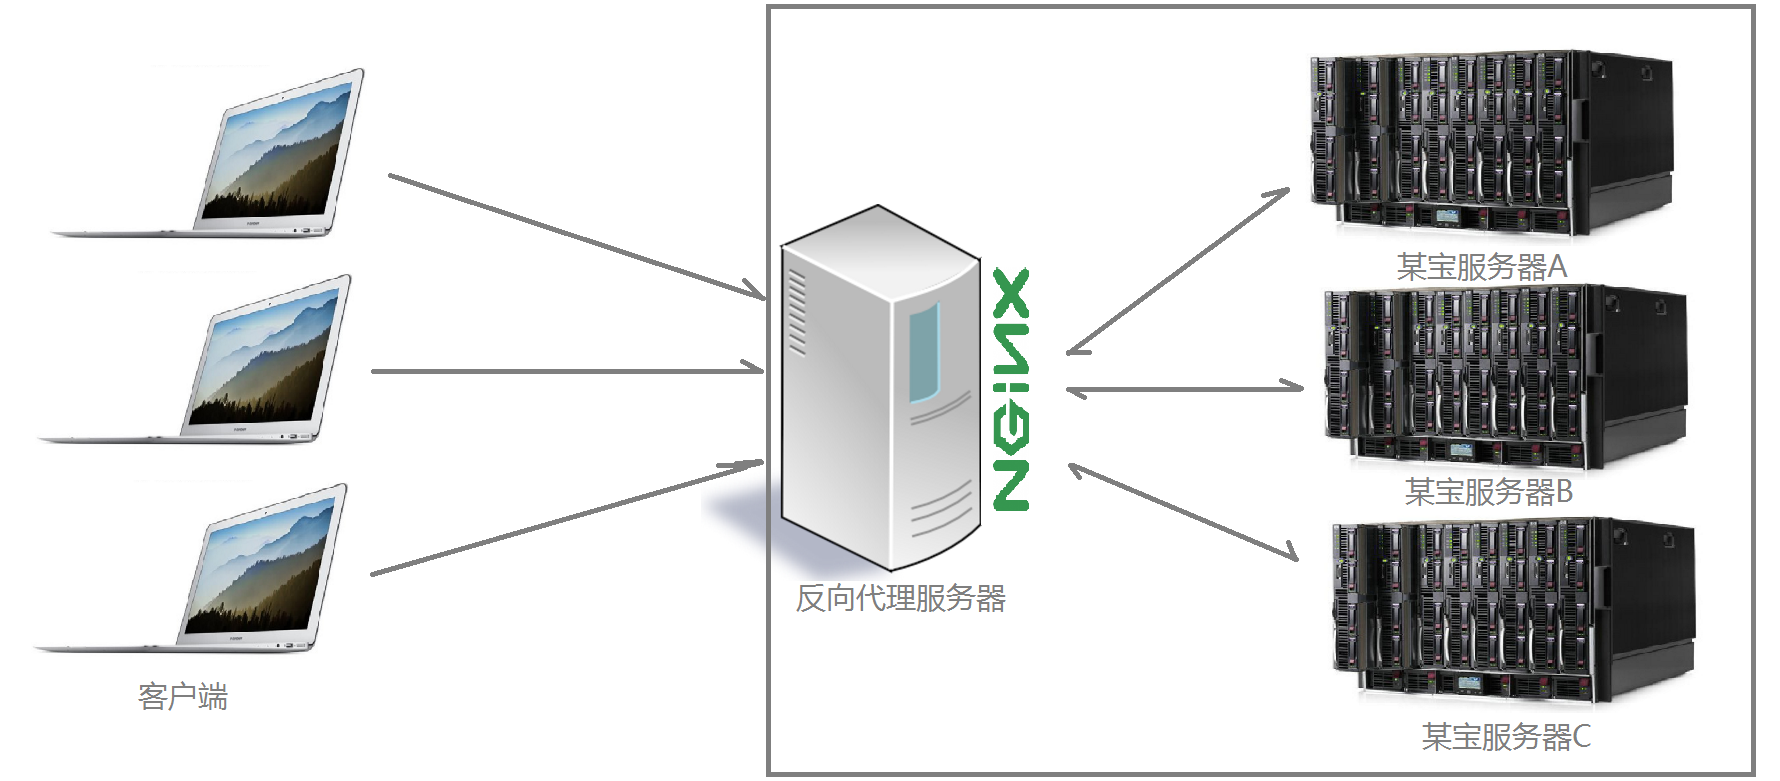 一篇文章搞懂nginx（什么是nginx，nginx反向代理，nginx安装，nginx配置）